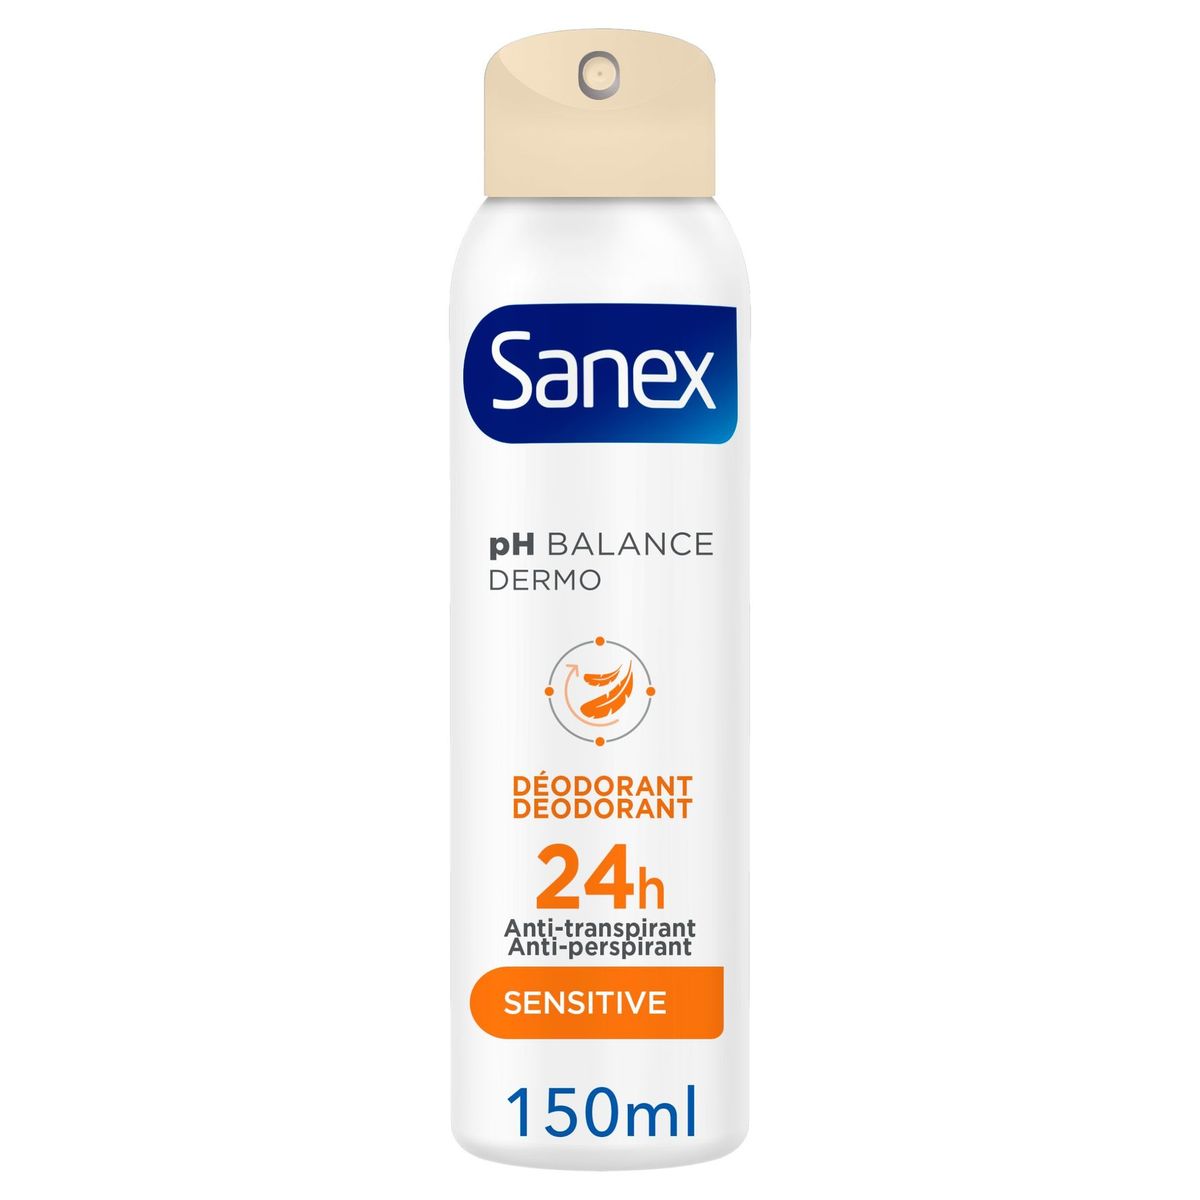 Sanex Dermo Sensitive deodorant spray - 150ml